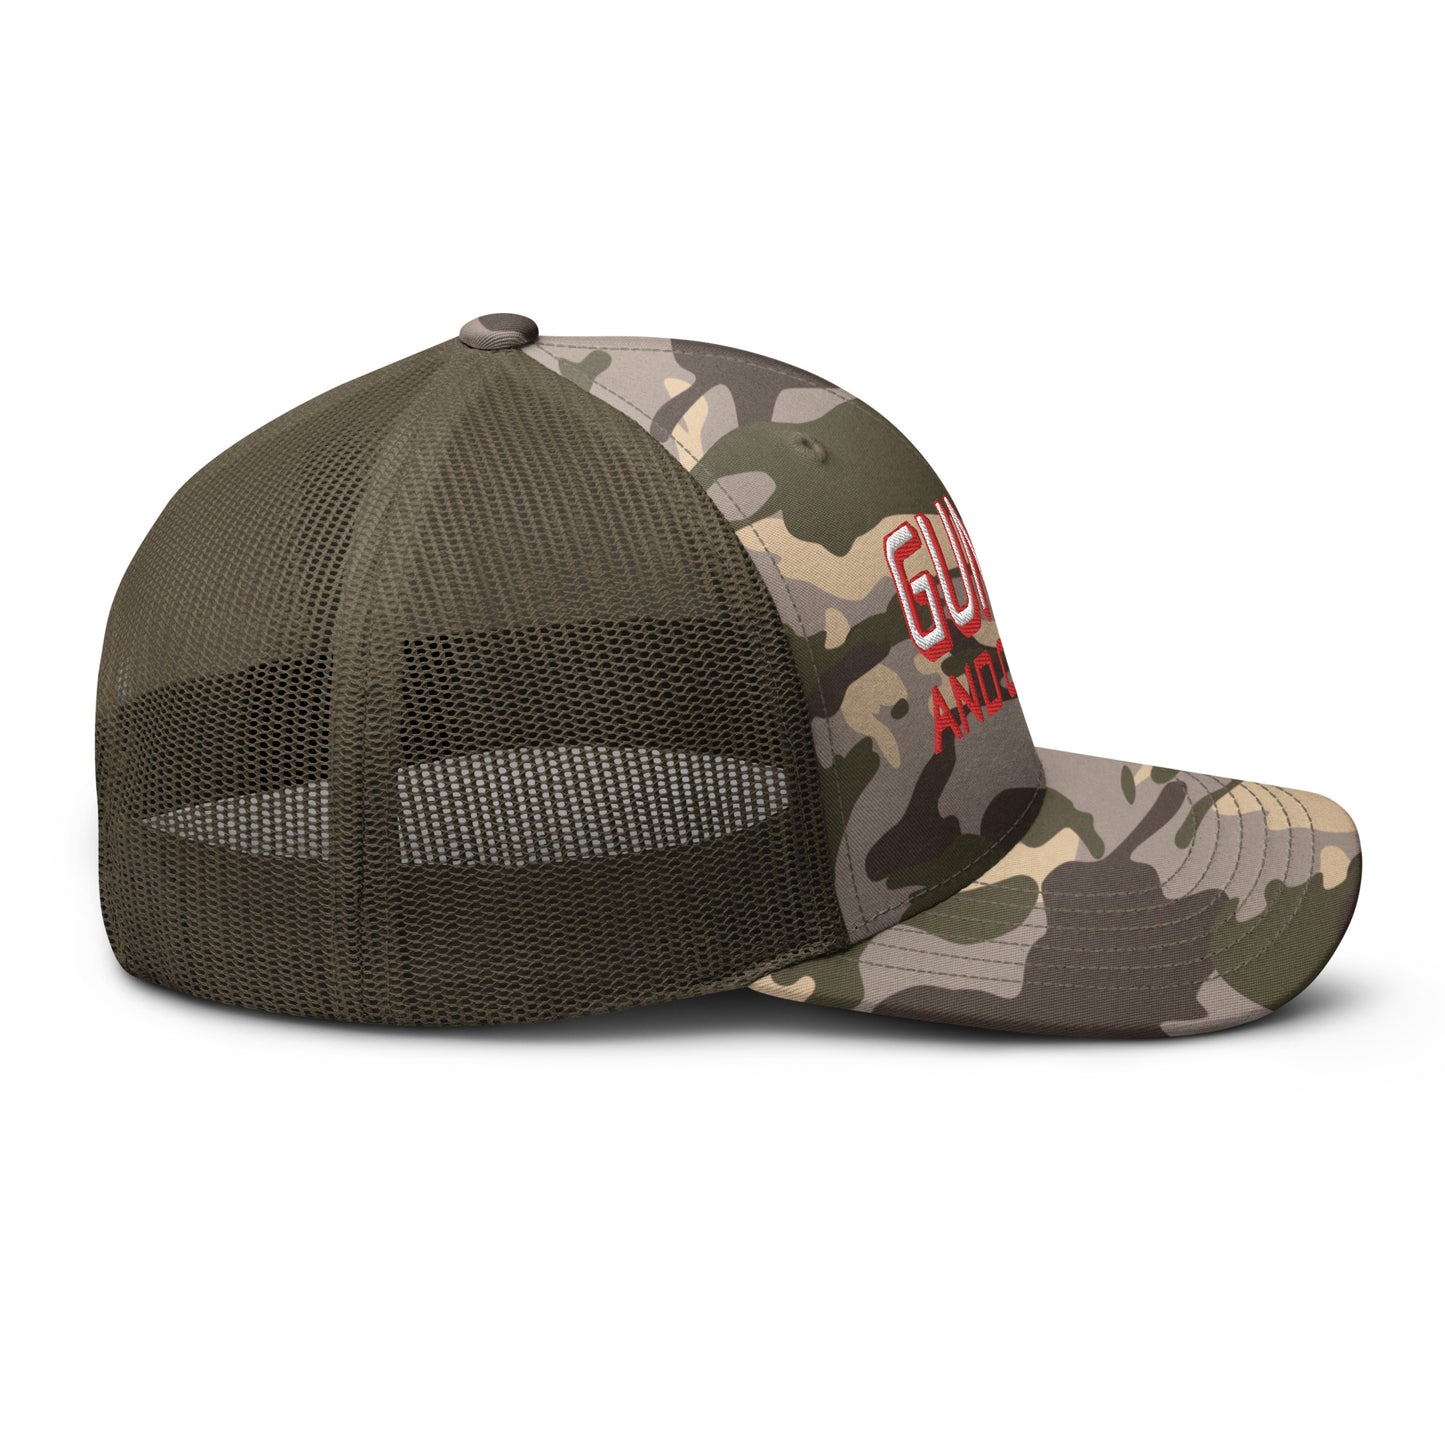 GUNFIX AND CHILL? Camouflage trucker hat